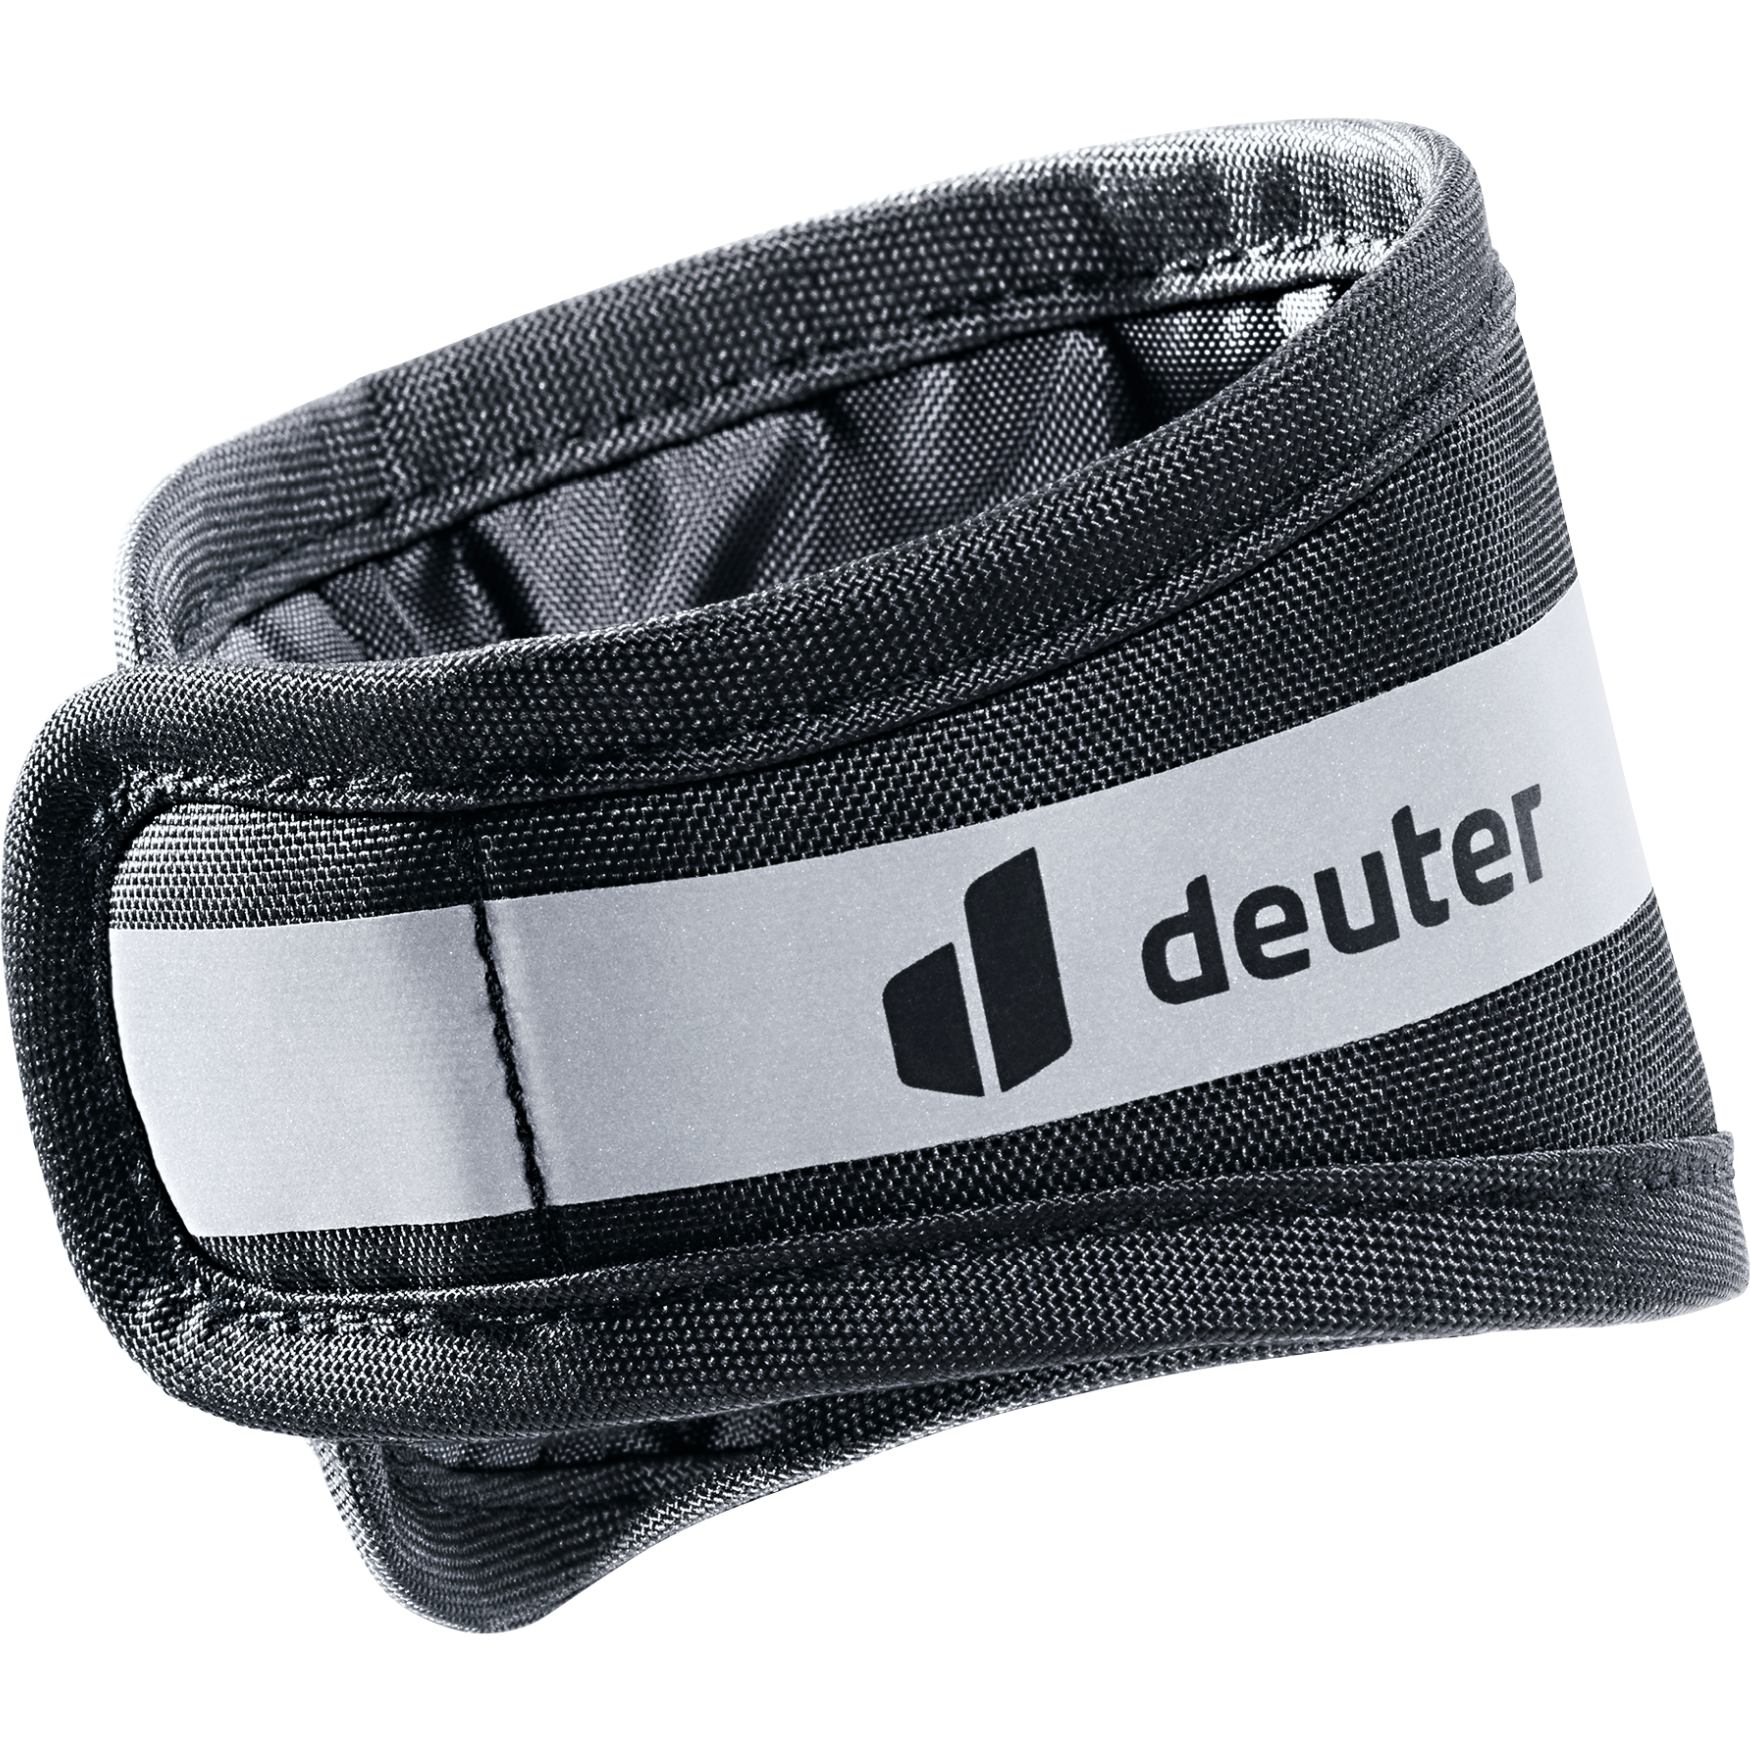 Productfoto van Deuter Pants Protector - black